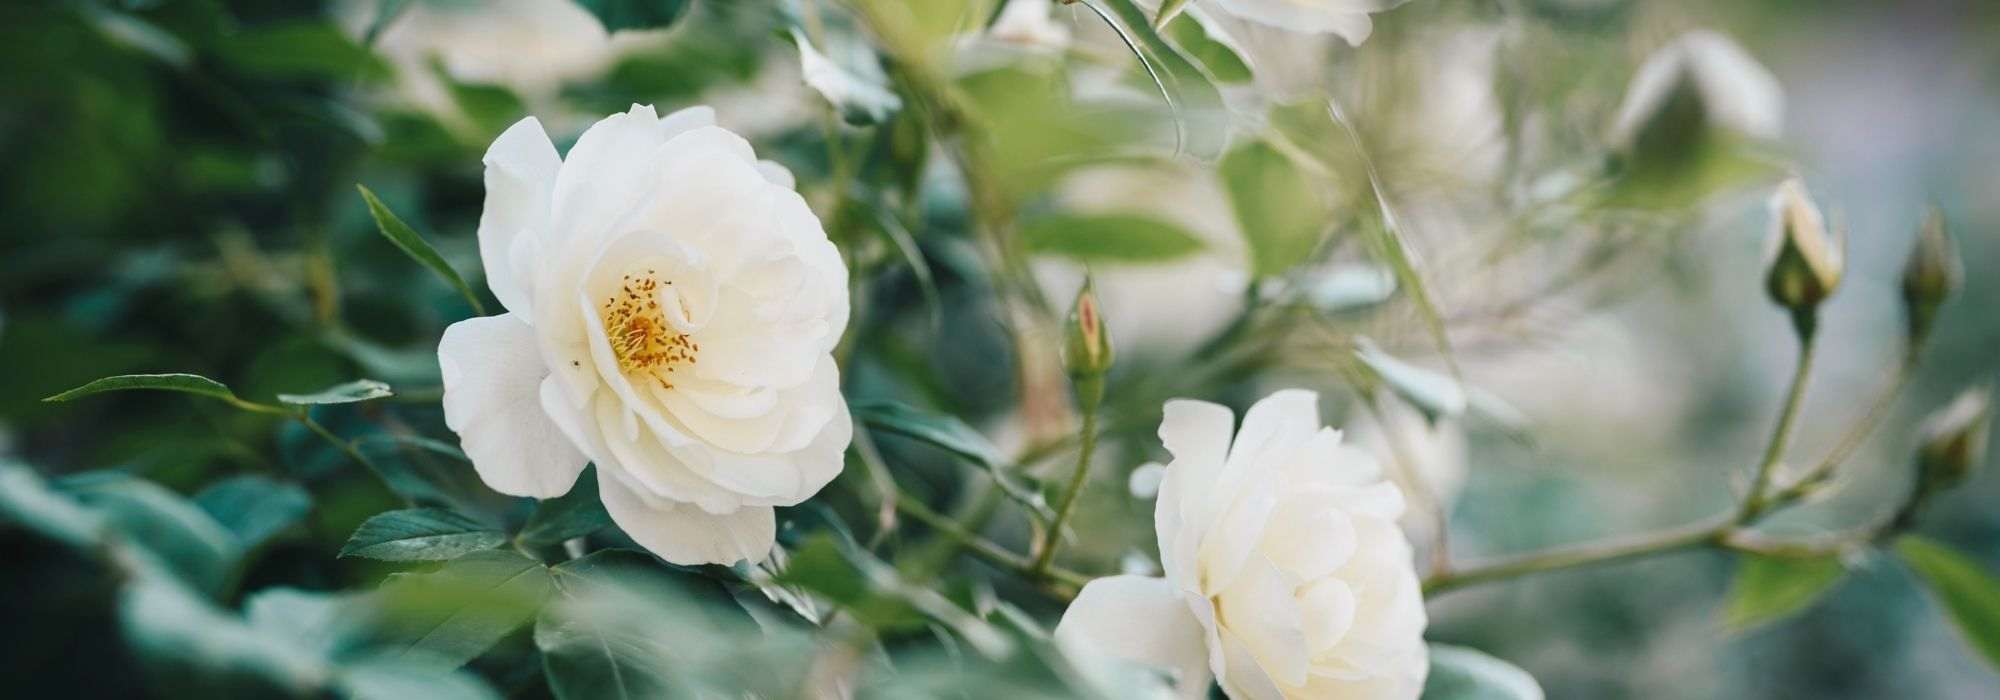 7 rosiers anglais David Austin à fleurs blanches